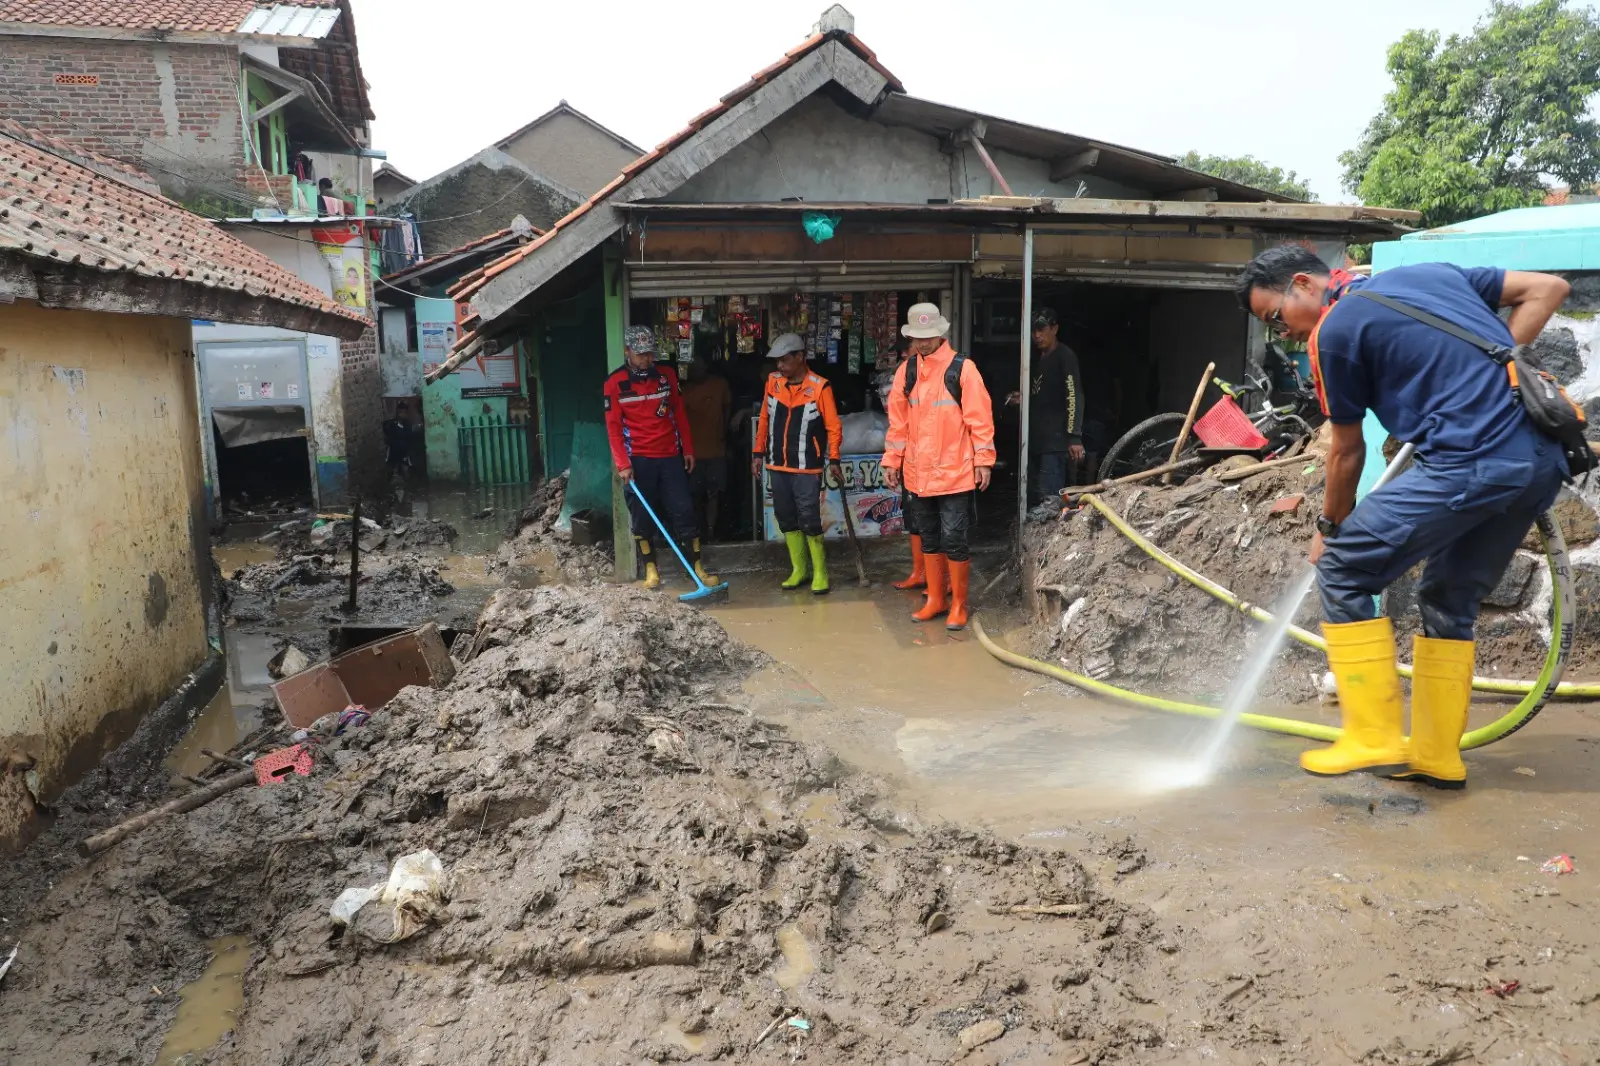 Tim gabungan dan masyarakat terus berupaya membangun tanggul penahan sementara dan membersihkan sisa material lumpur dan sampah yang terbawa arus banjir di Kecamatan Dayeuhkolot, Kabupaten Bandung, Jawa Barat pada Senin (15/1).